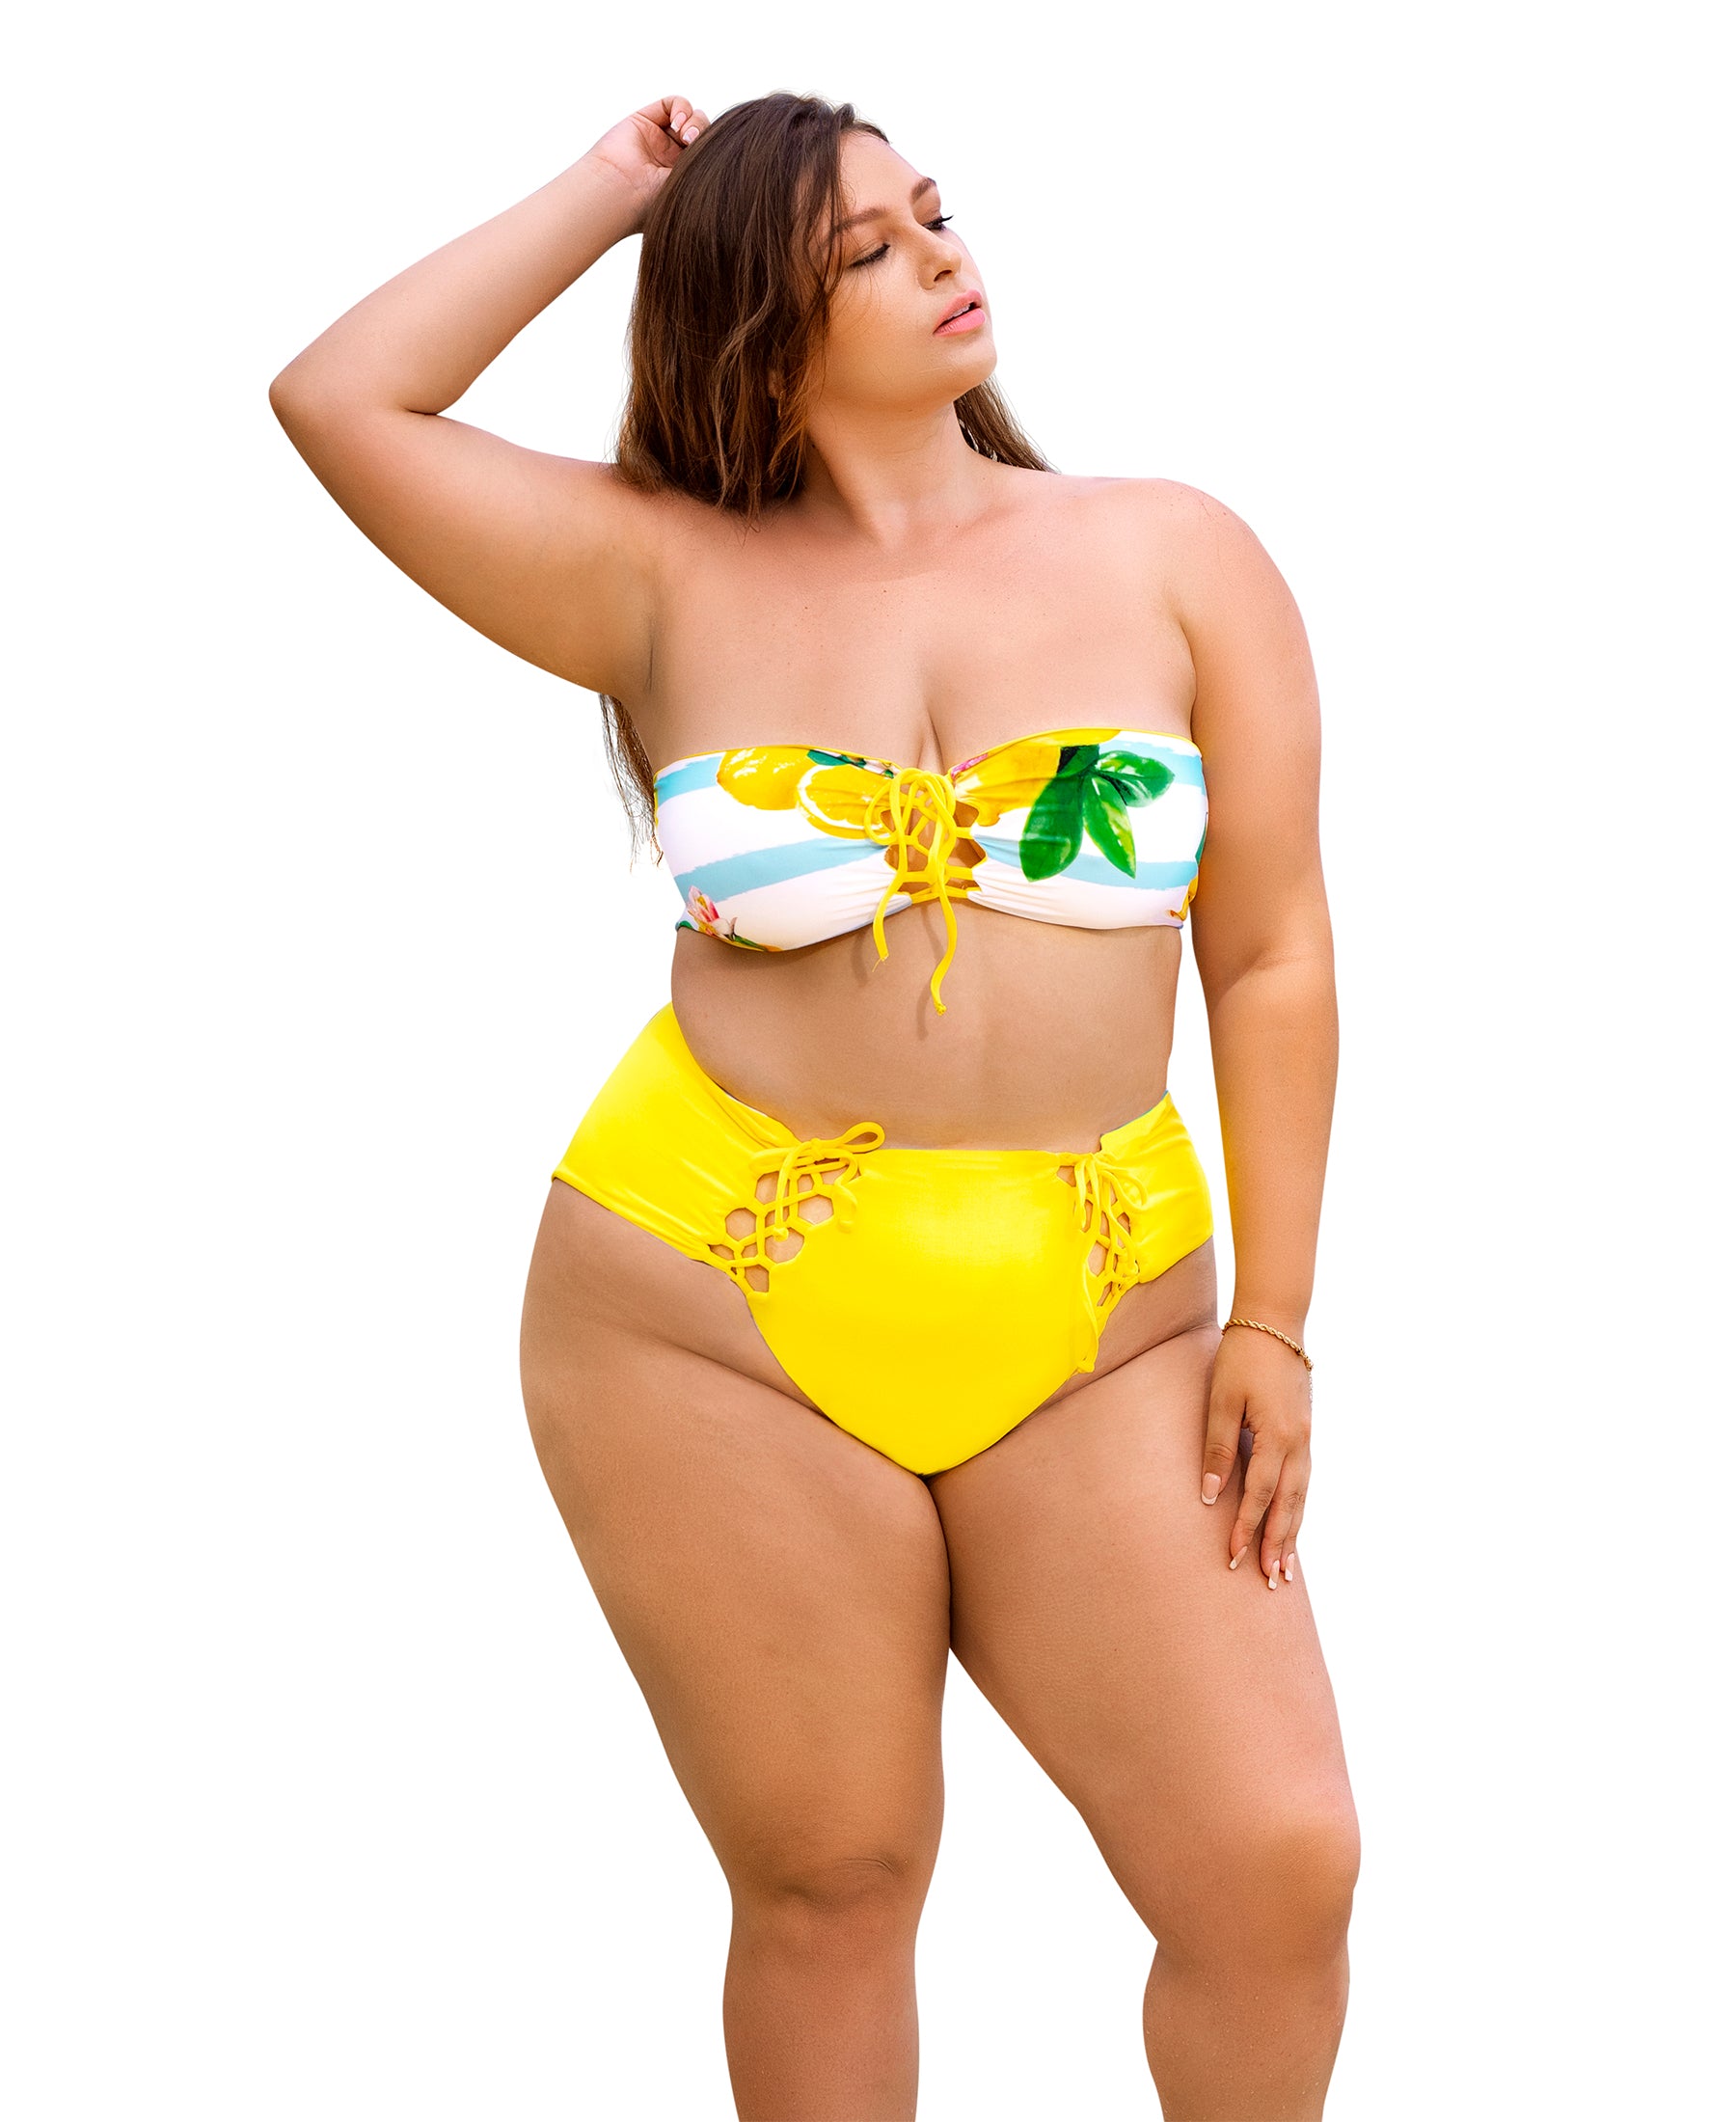 67037X Reversible 2pc Swimsuit Citrus Print/Yellow front view